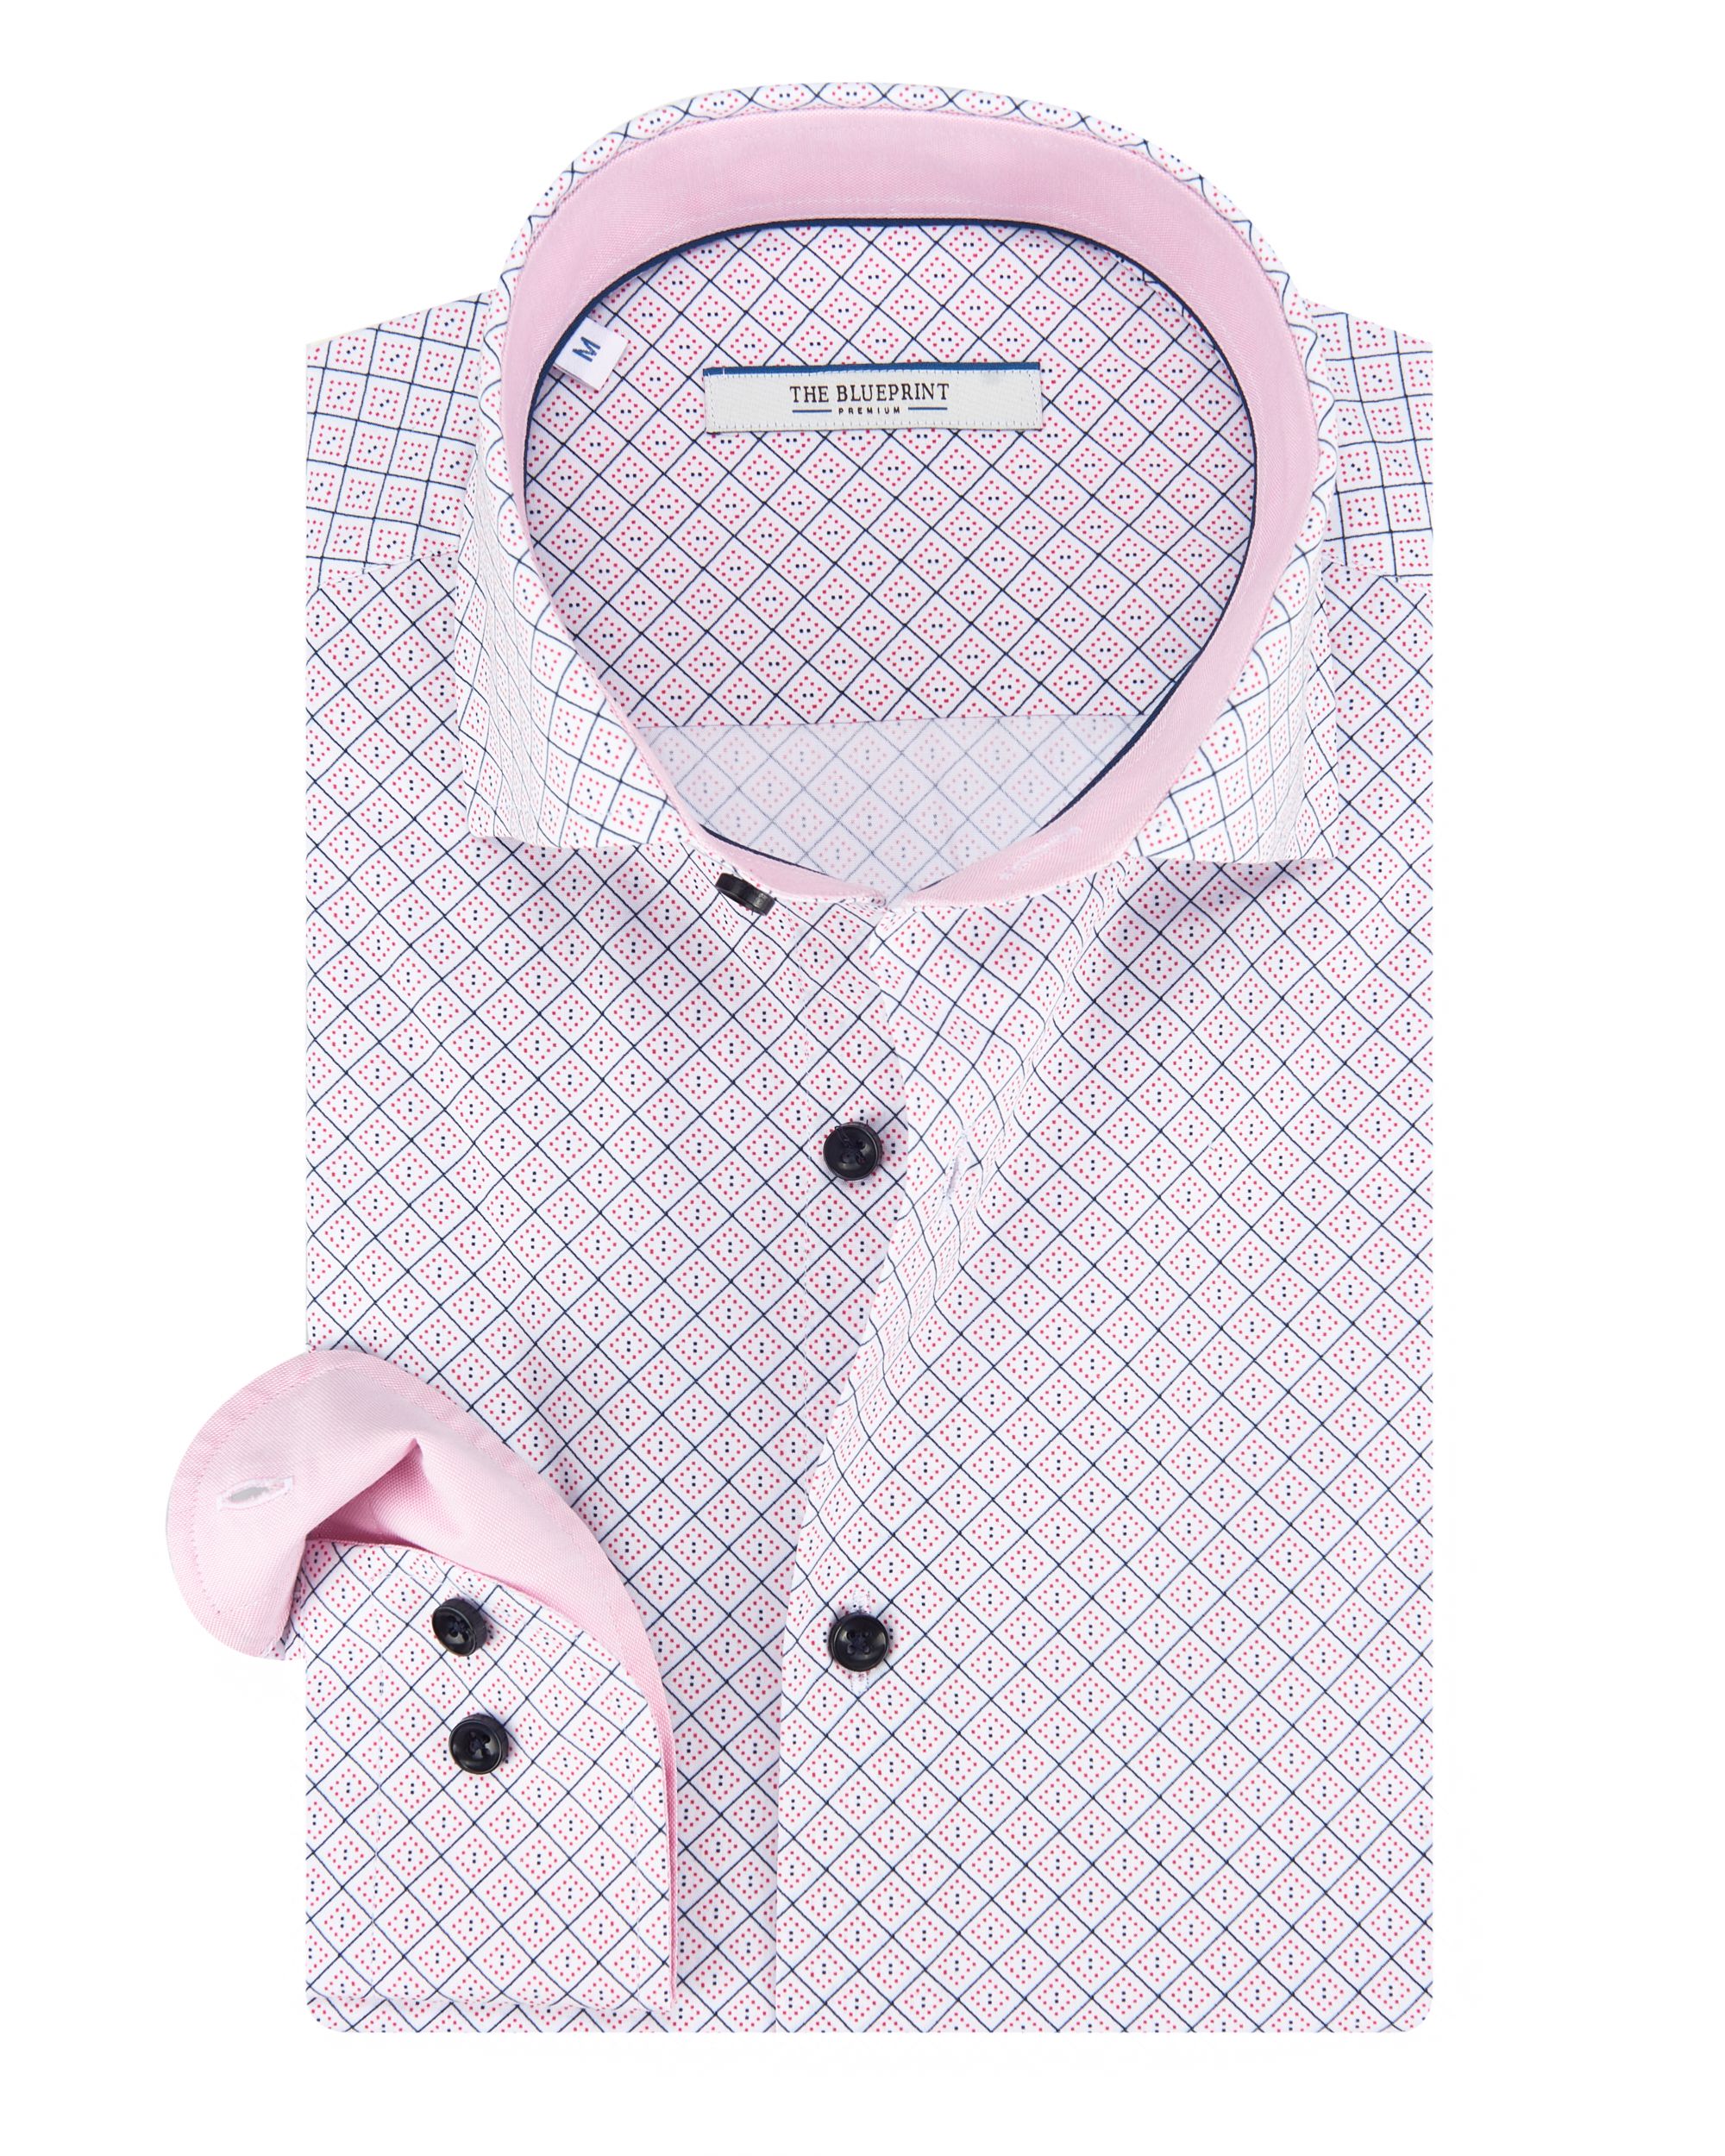 The BLUEPRINT Premium Trendy overhemd LM Lichtrood dessin 084504-001-L